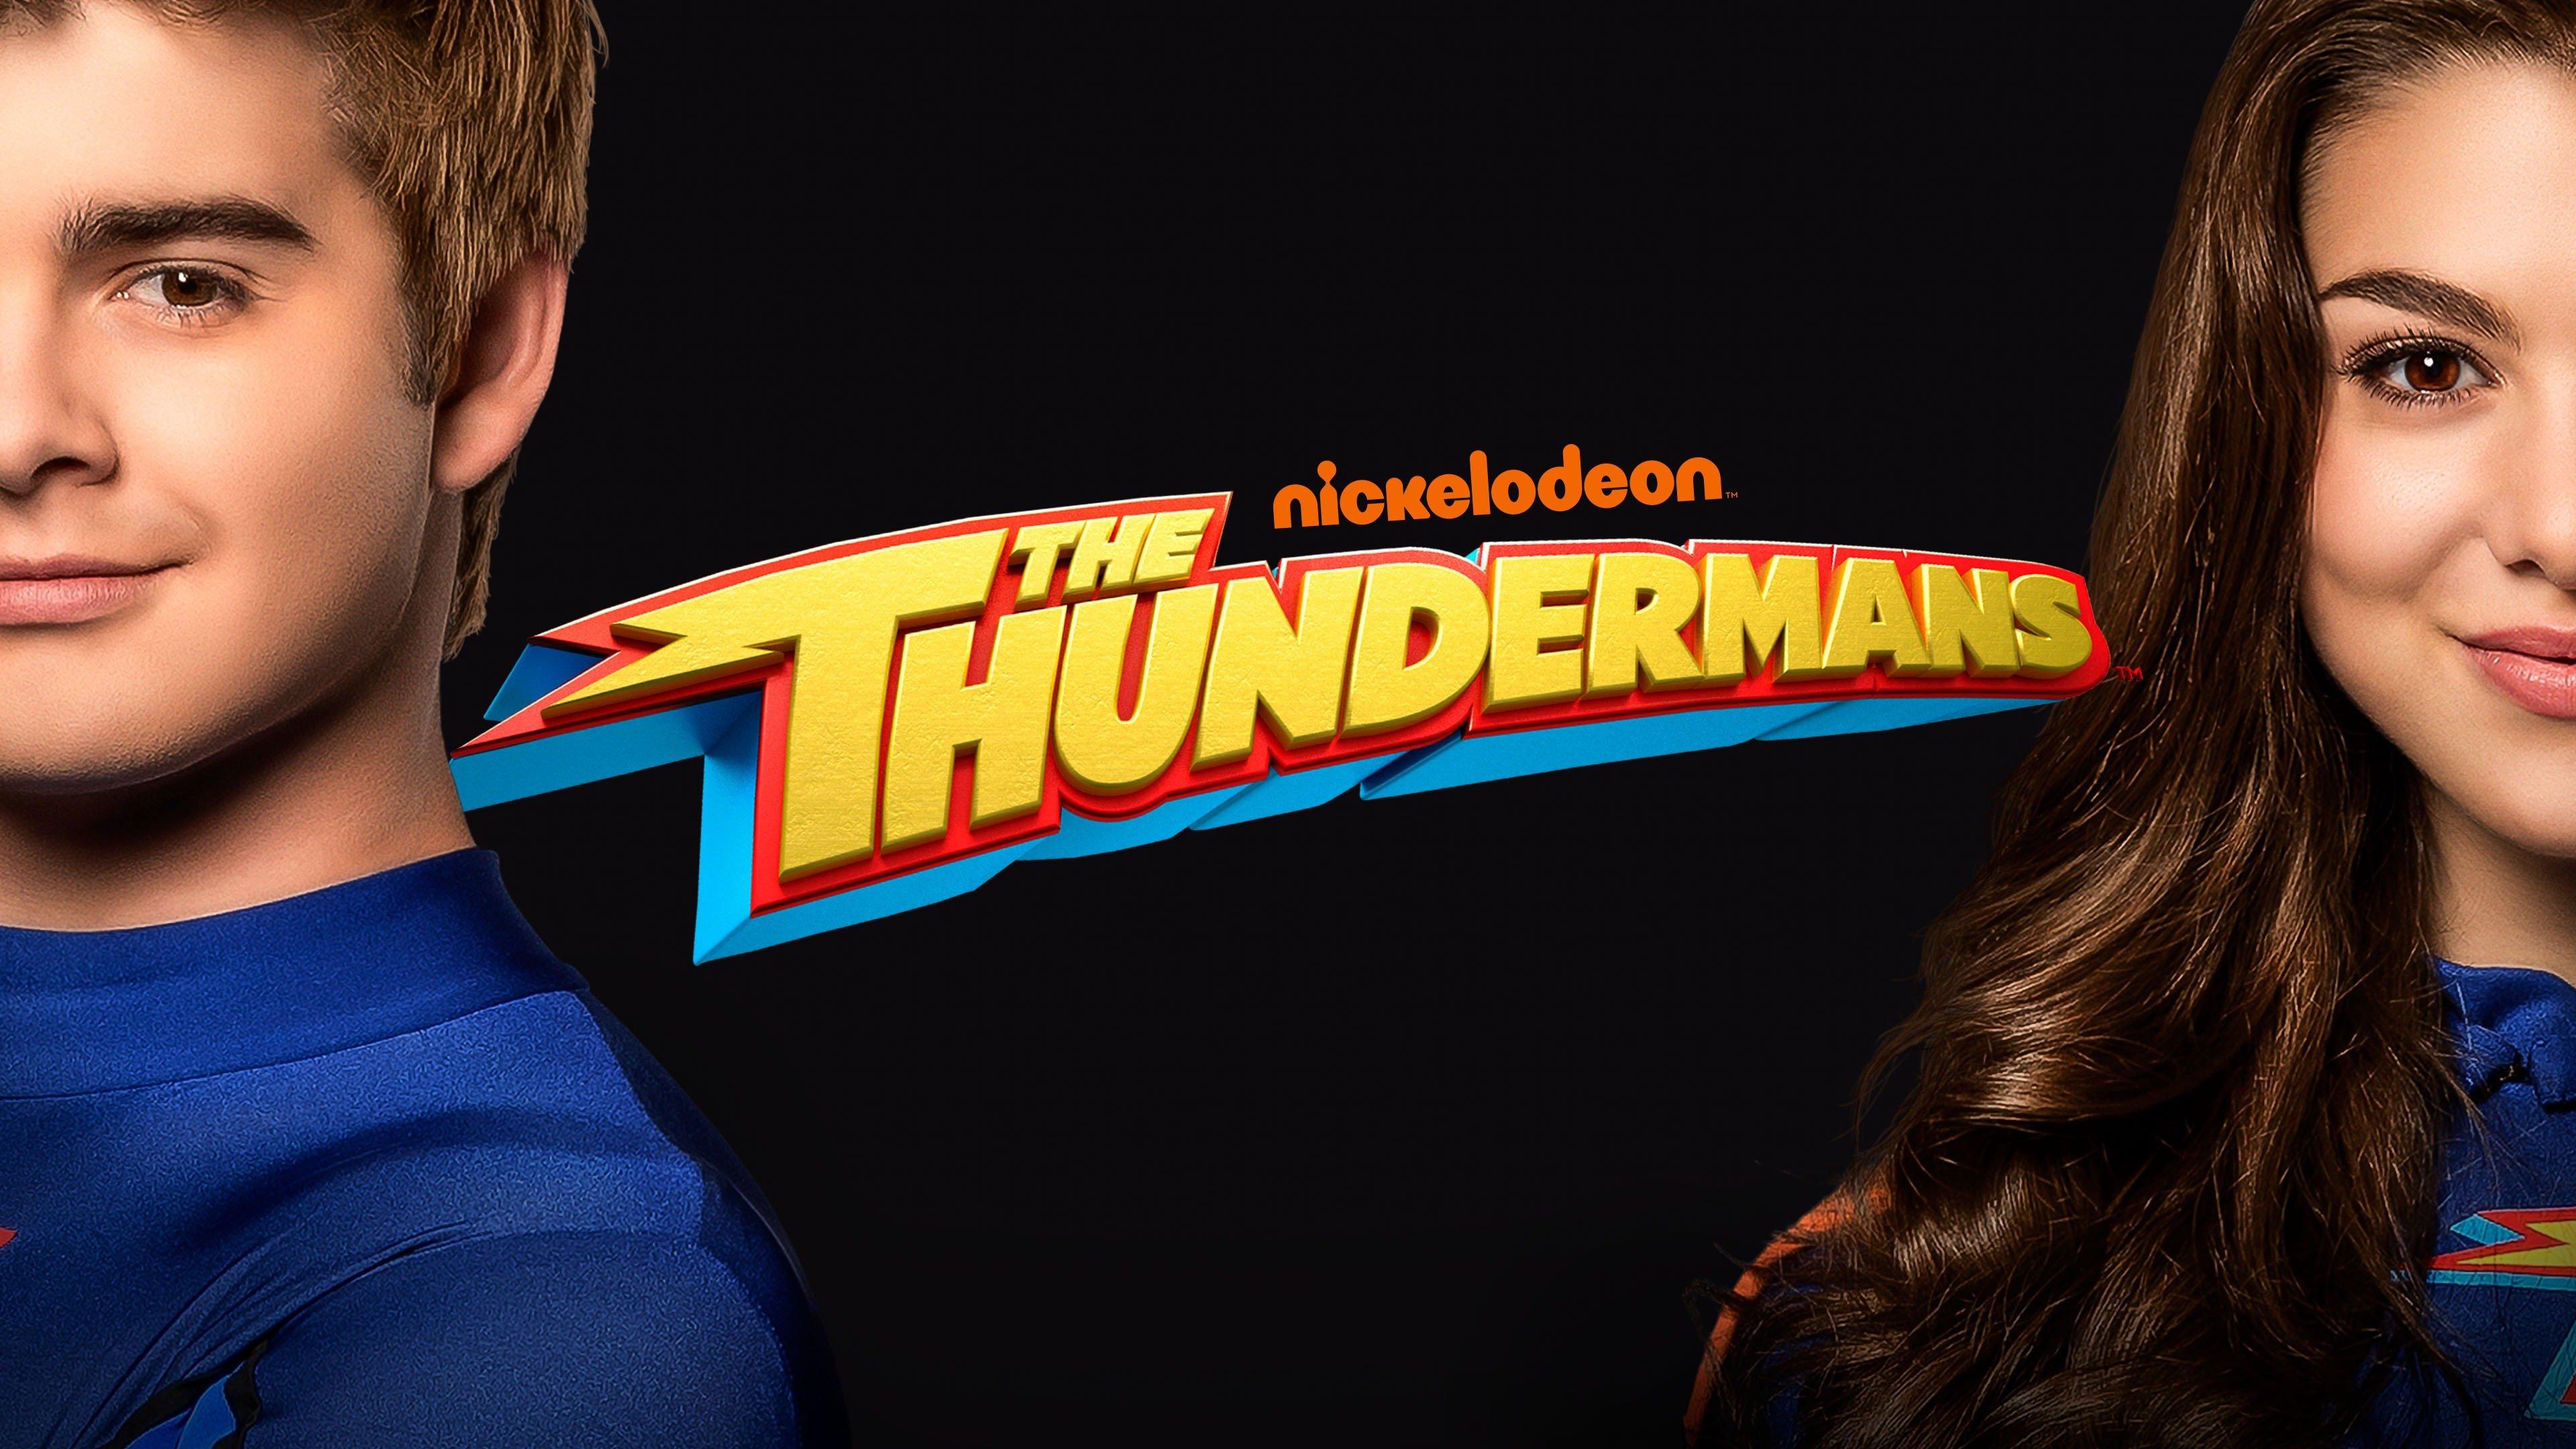 The Thundermans.